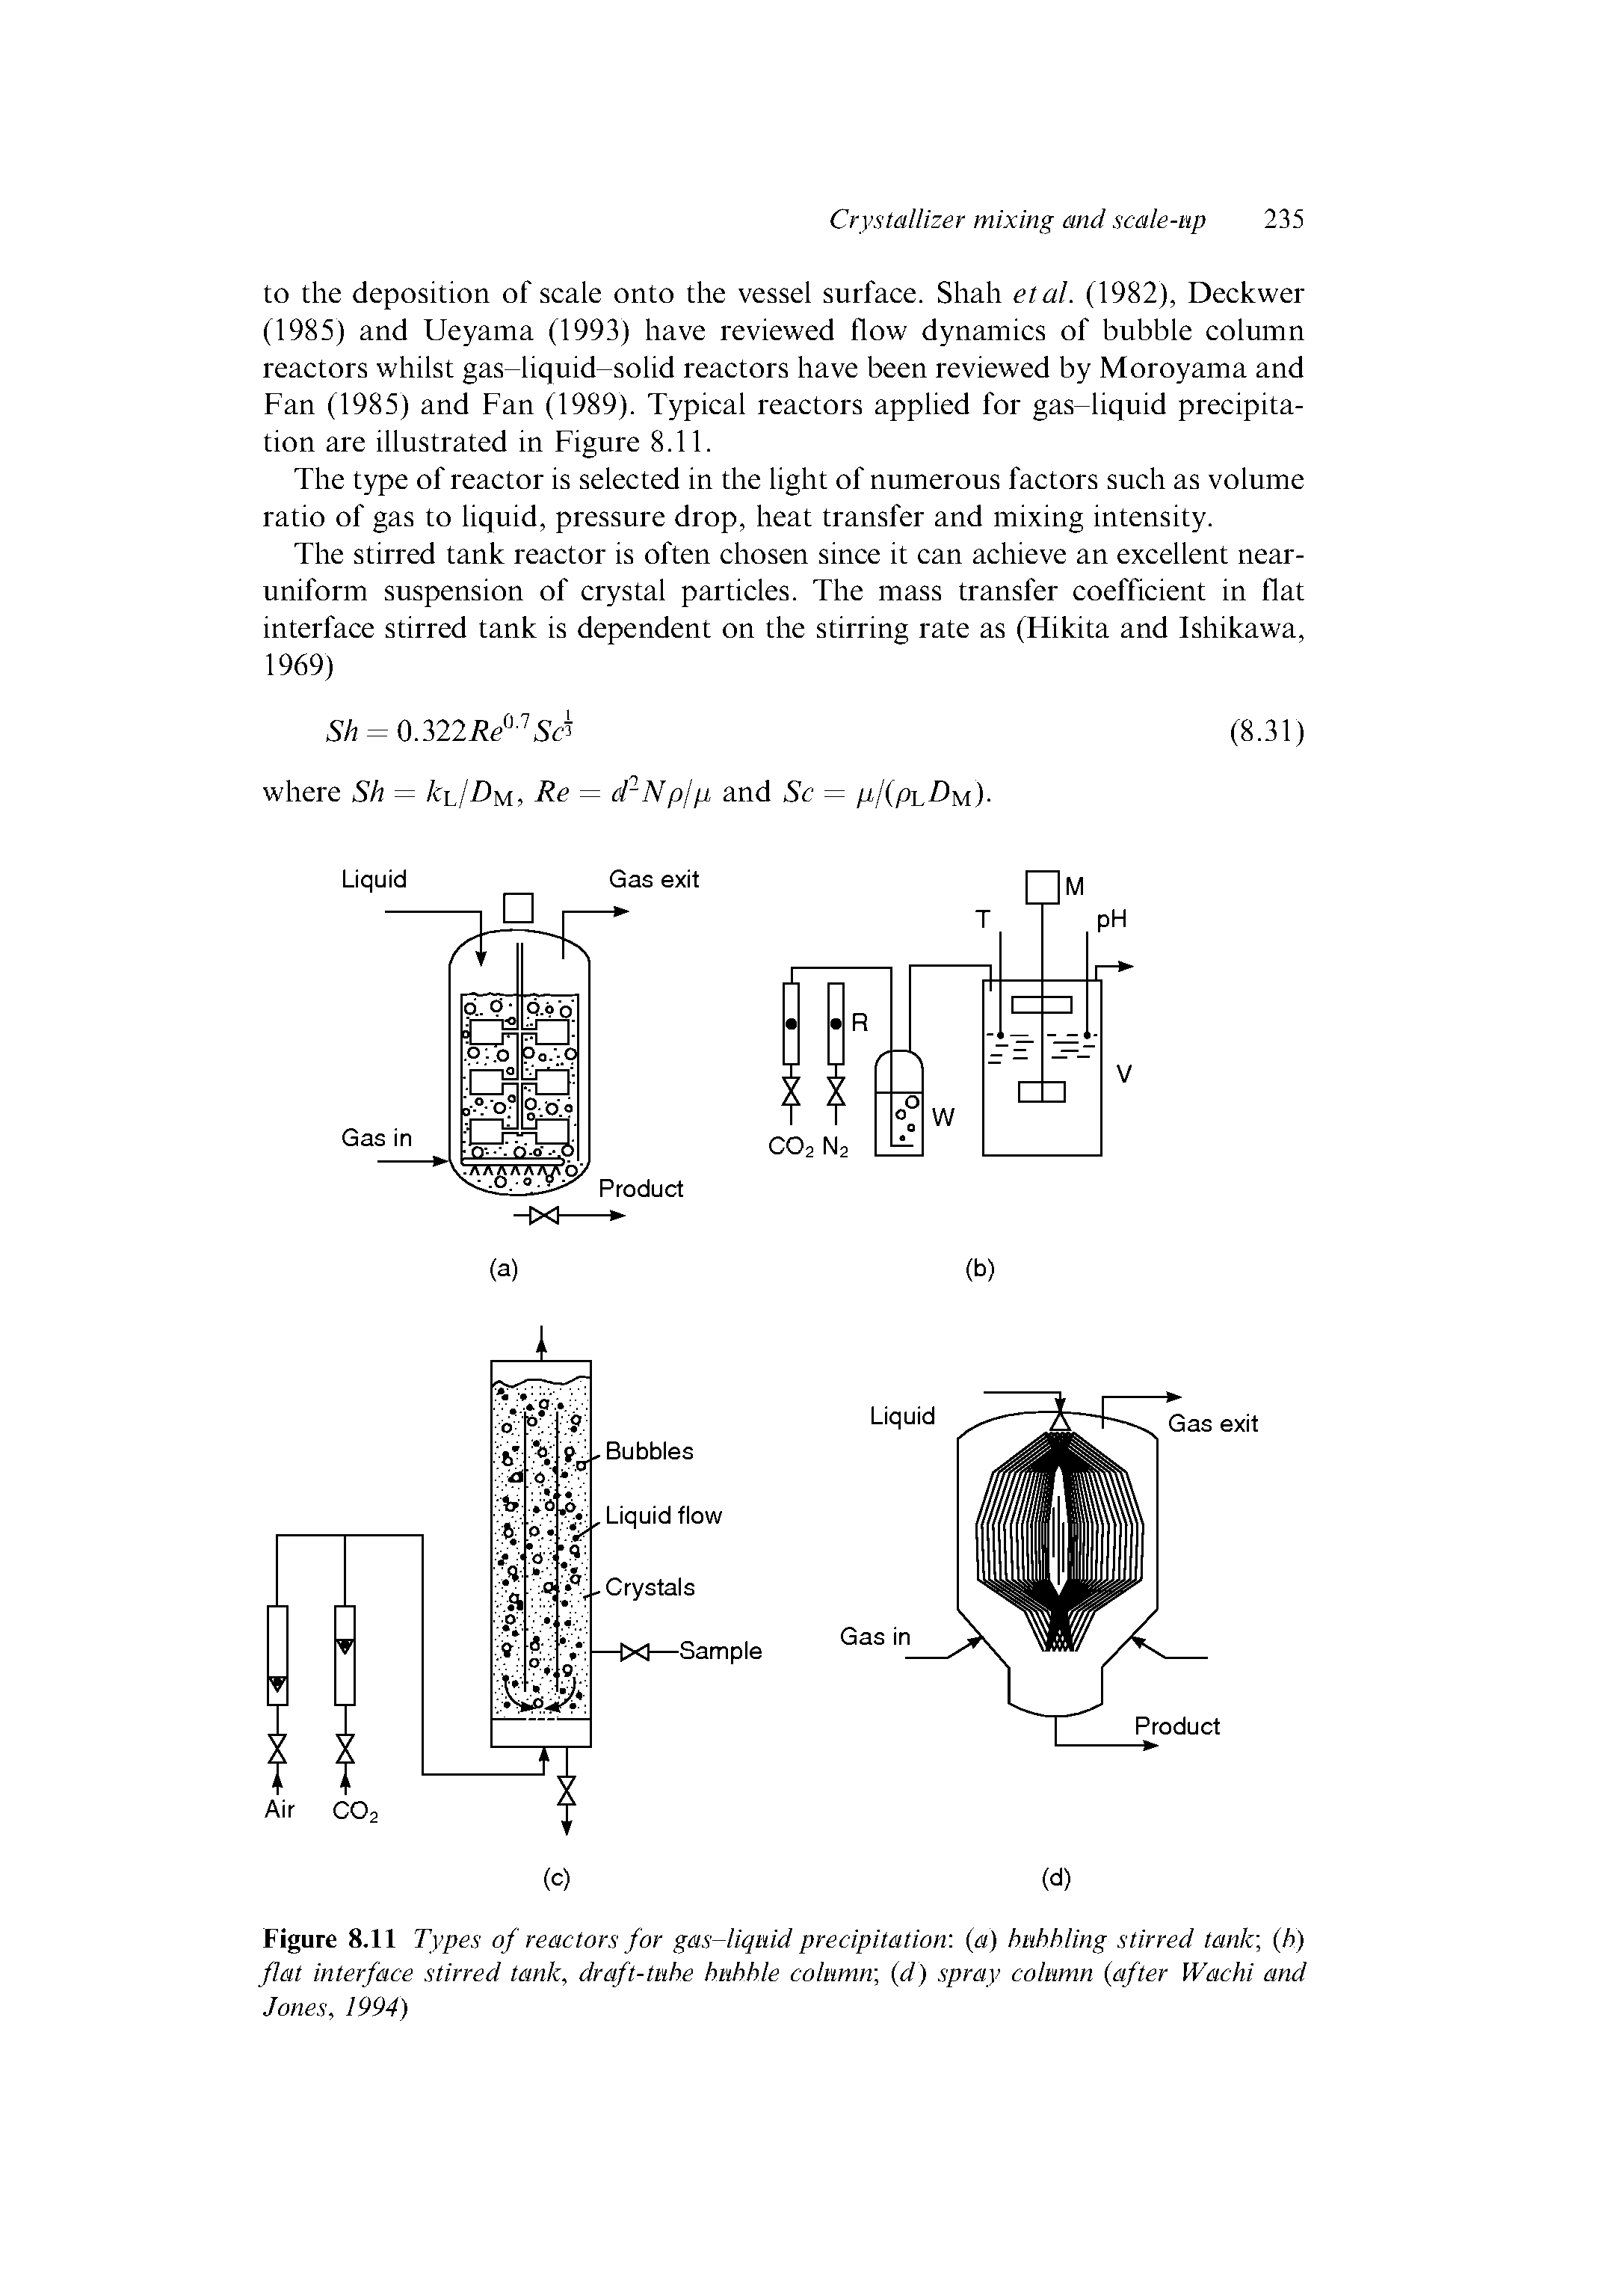 Figure 8.11 Types of reactors for gas-liquid precipitation, (a) bubbling stirred tank, (b) fiat interface stirred tank, draft-tube bubble column, (d) spray column after Wachi and Jones, 1994)...